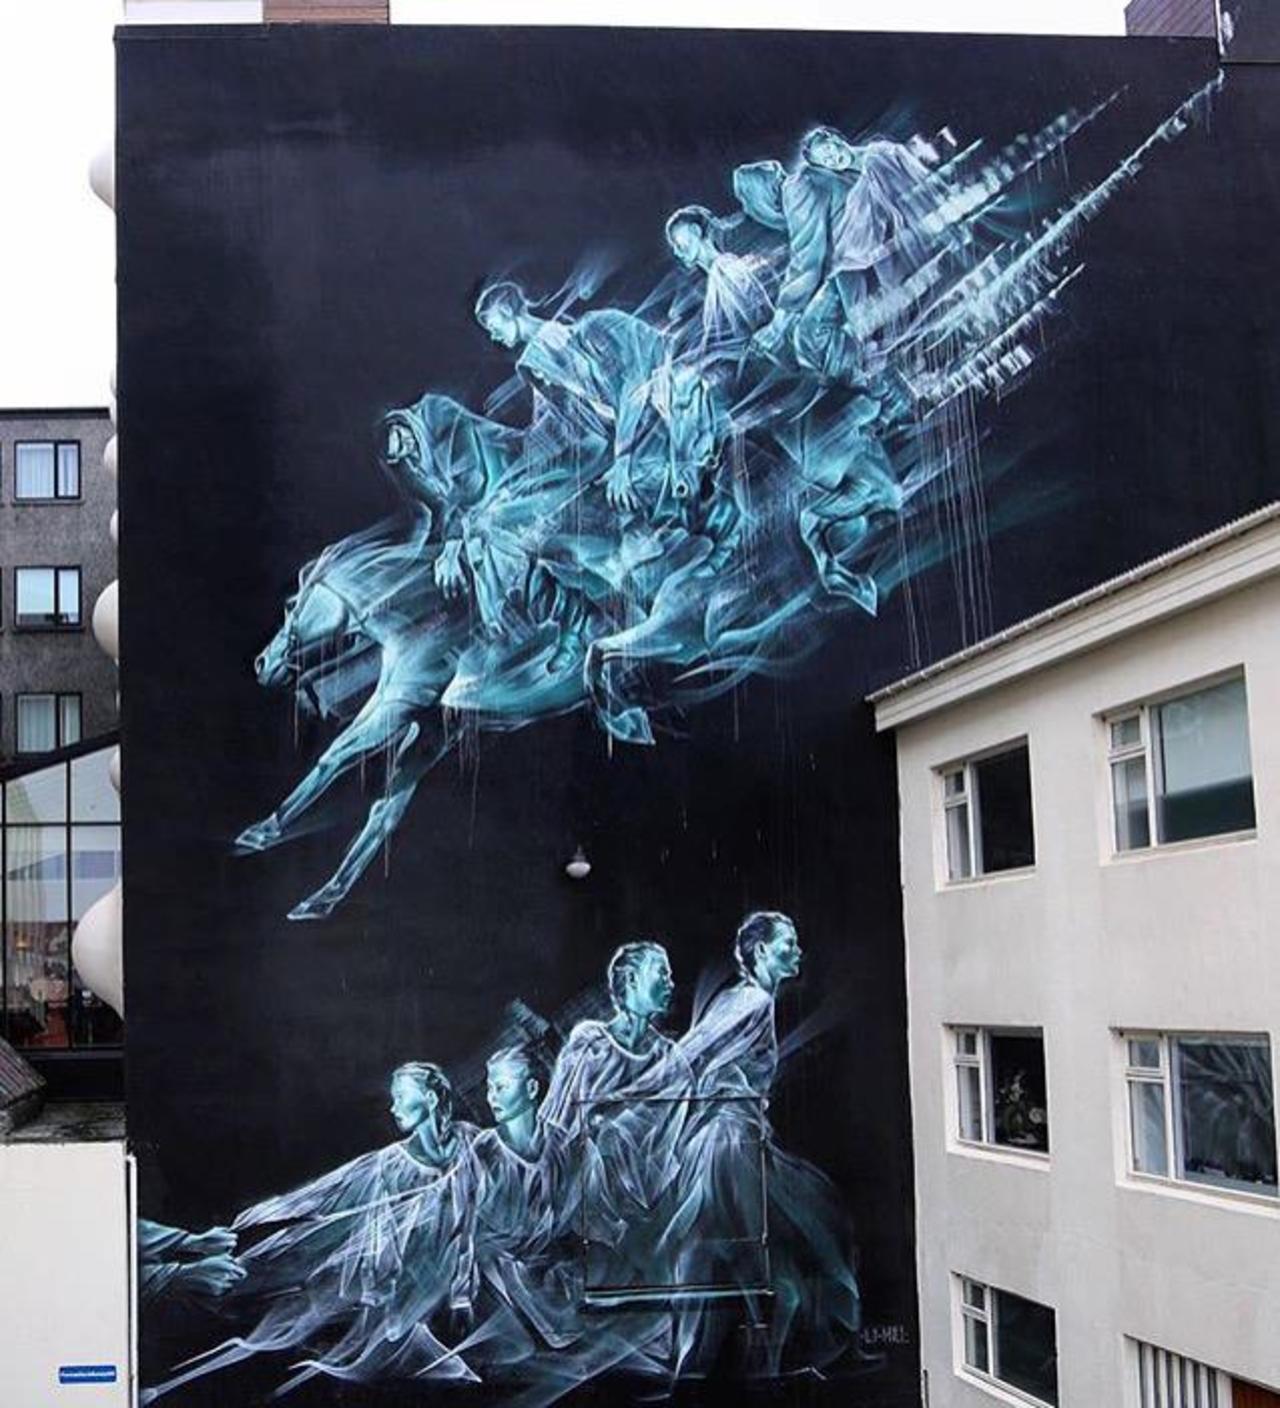 Street Art by li hill in Reykjavik 

#art #graffiti #mural #streetart http://t.co/Yzkc2XvfyS